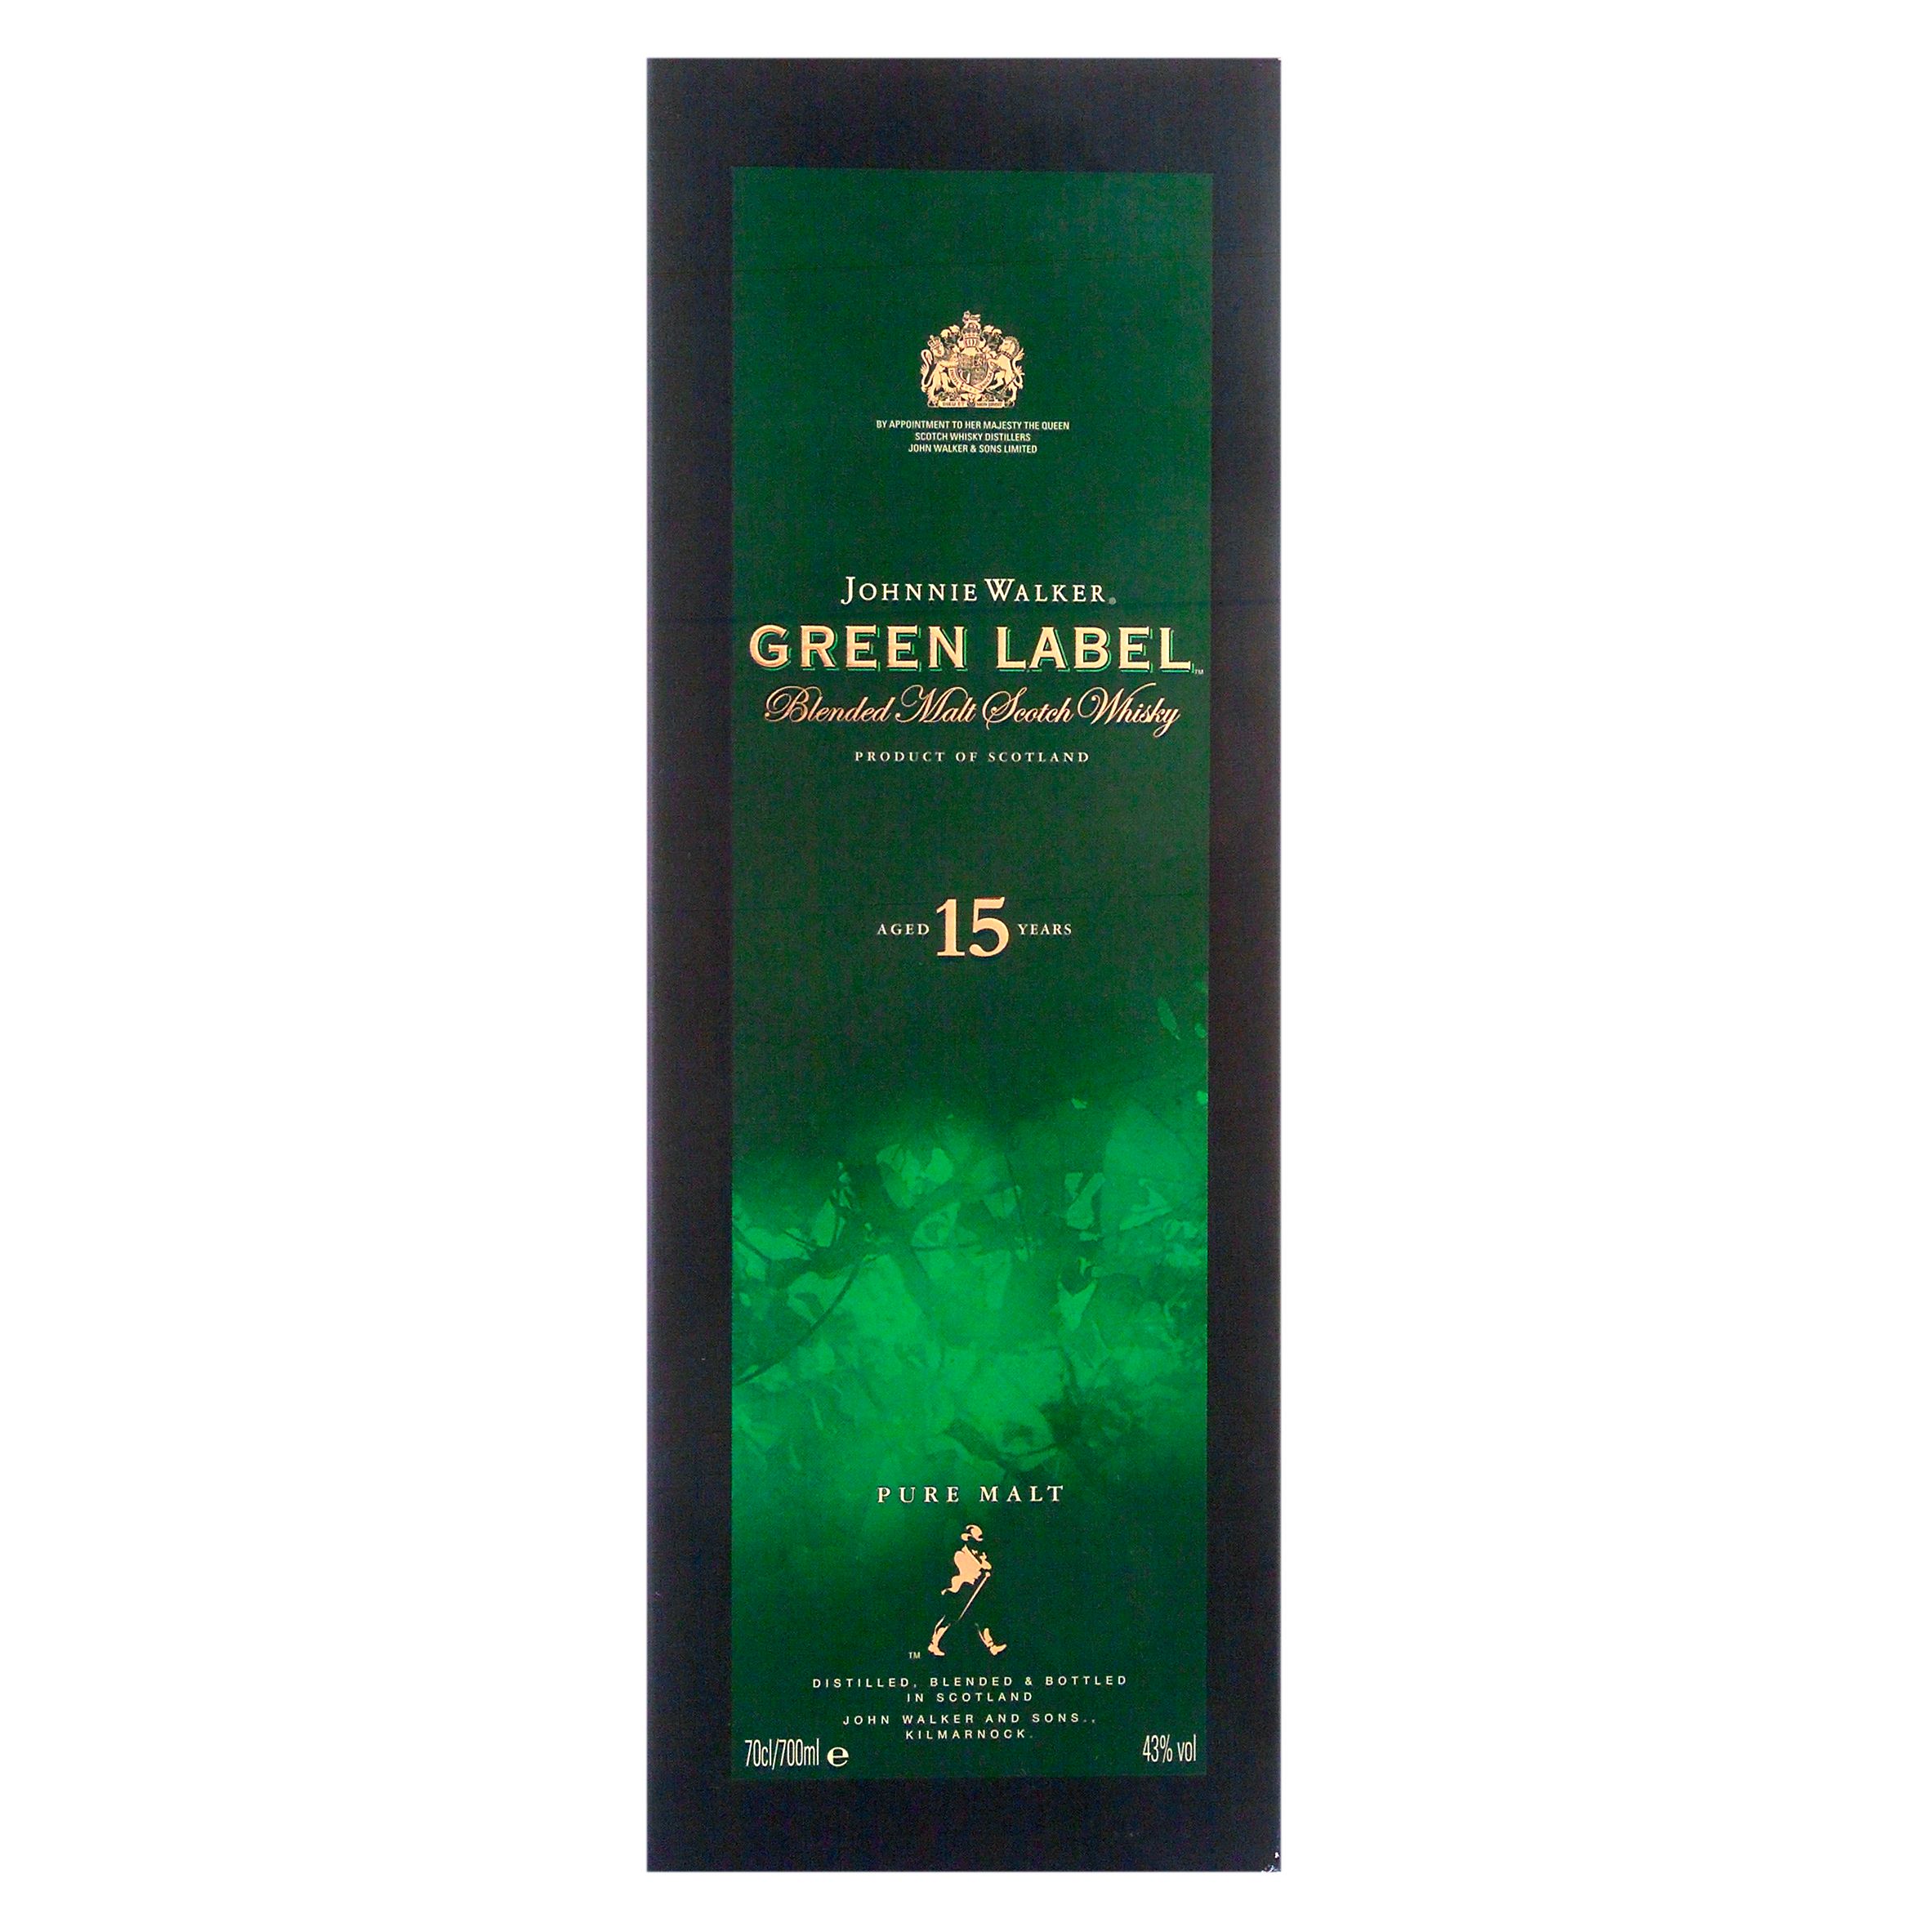 Johnnie Walker Green Label 15 Year Old Scotch Whisky at JohnLewis